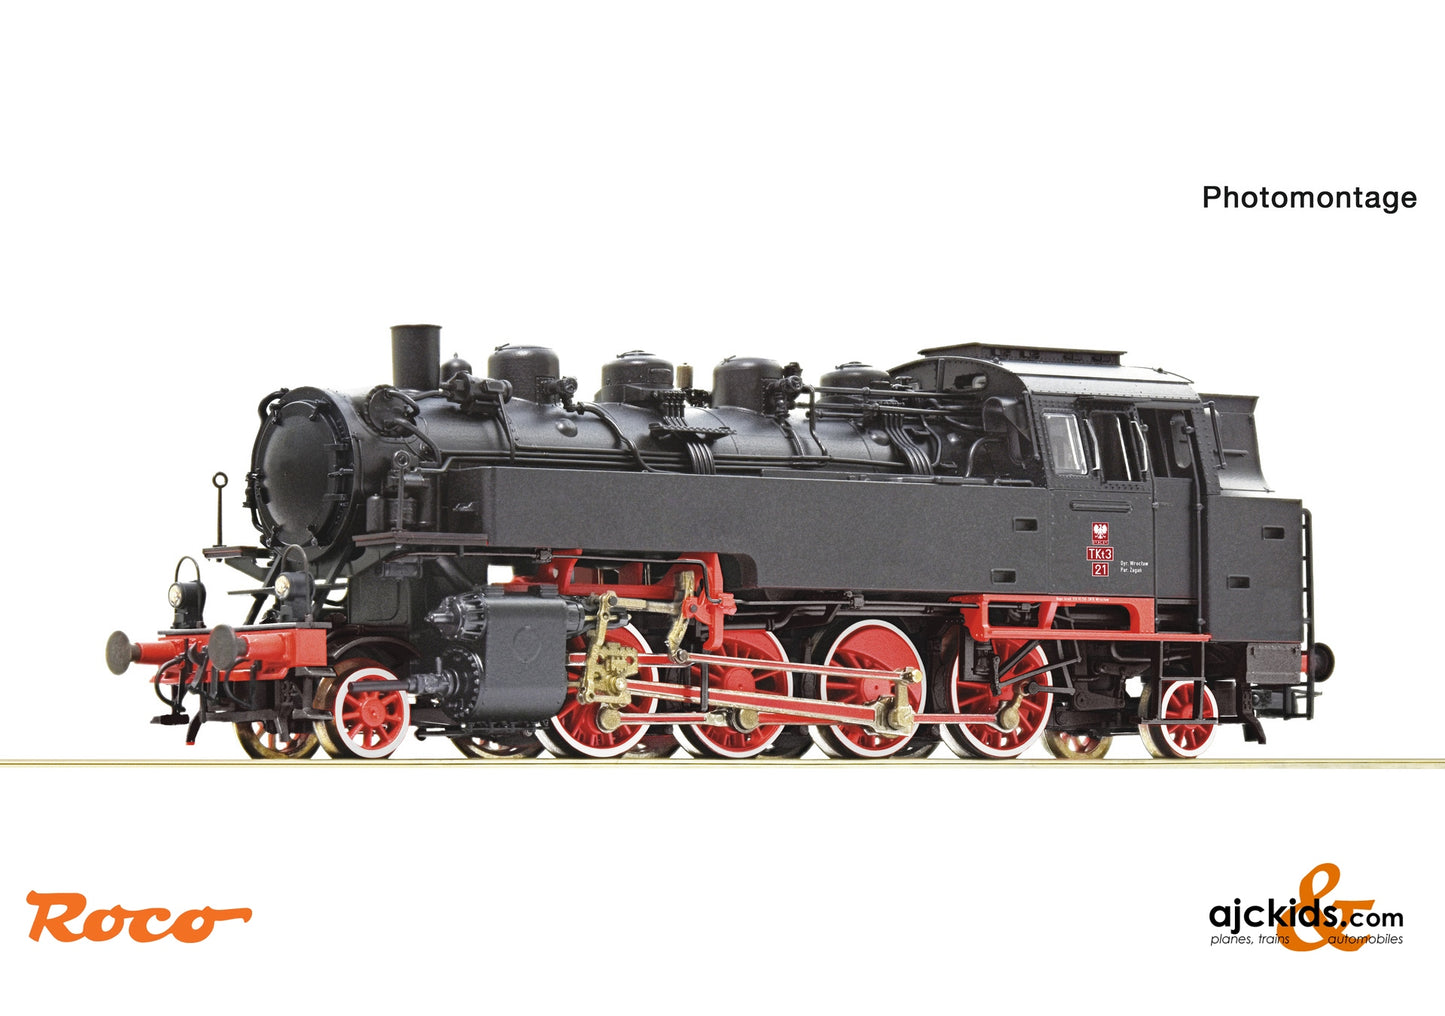 Roco 7110002 - Steam locomotive TKt3, PKP at Ajckids.com